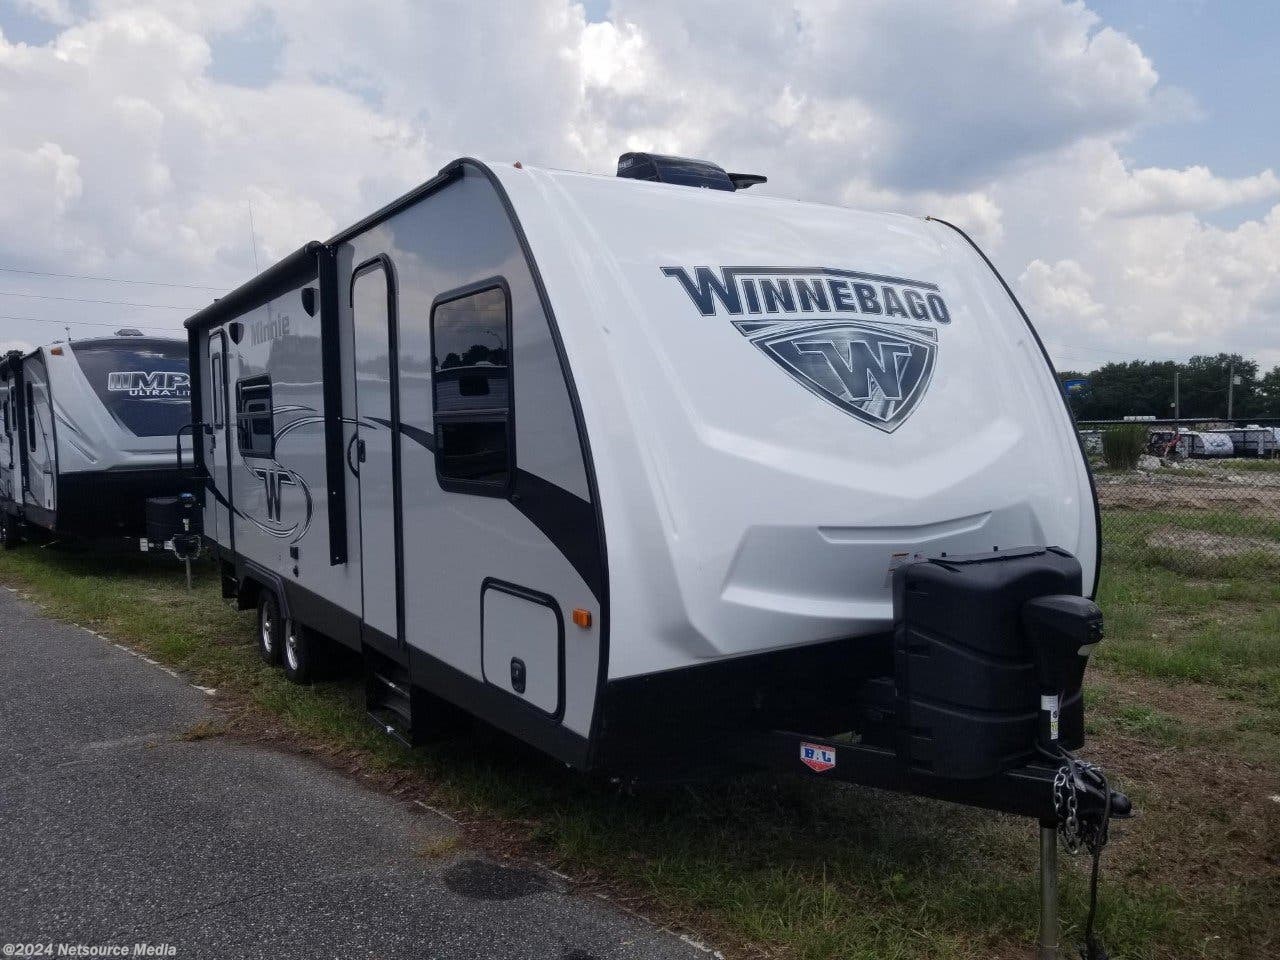 Used Winnebago Travel trailers for sale in FL ...